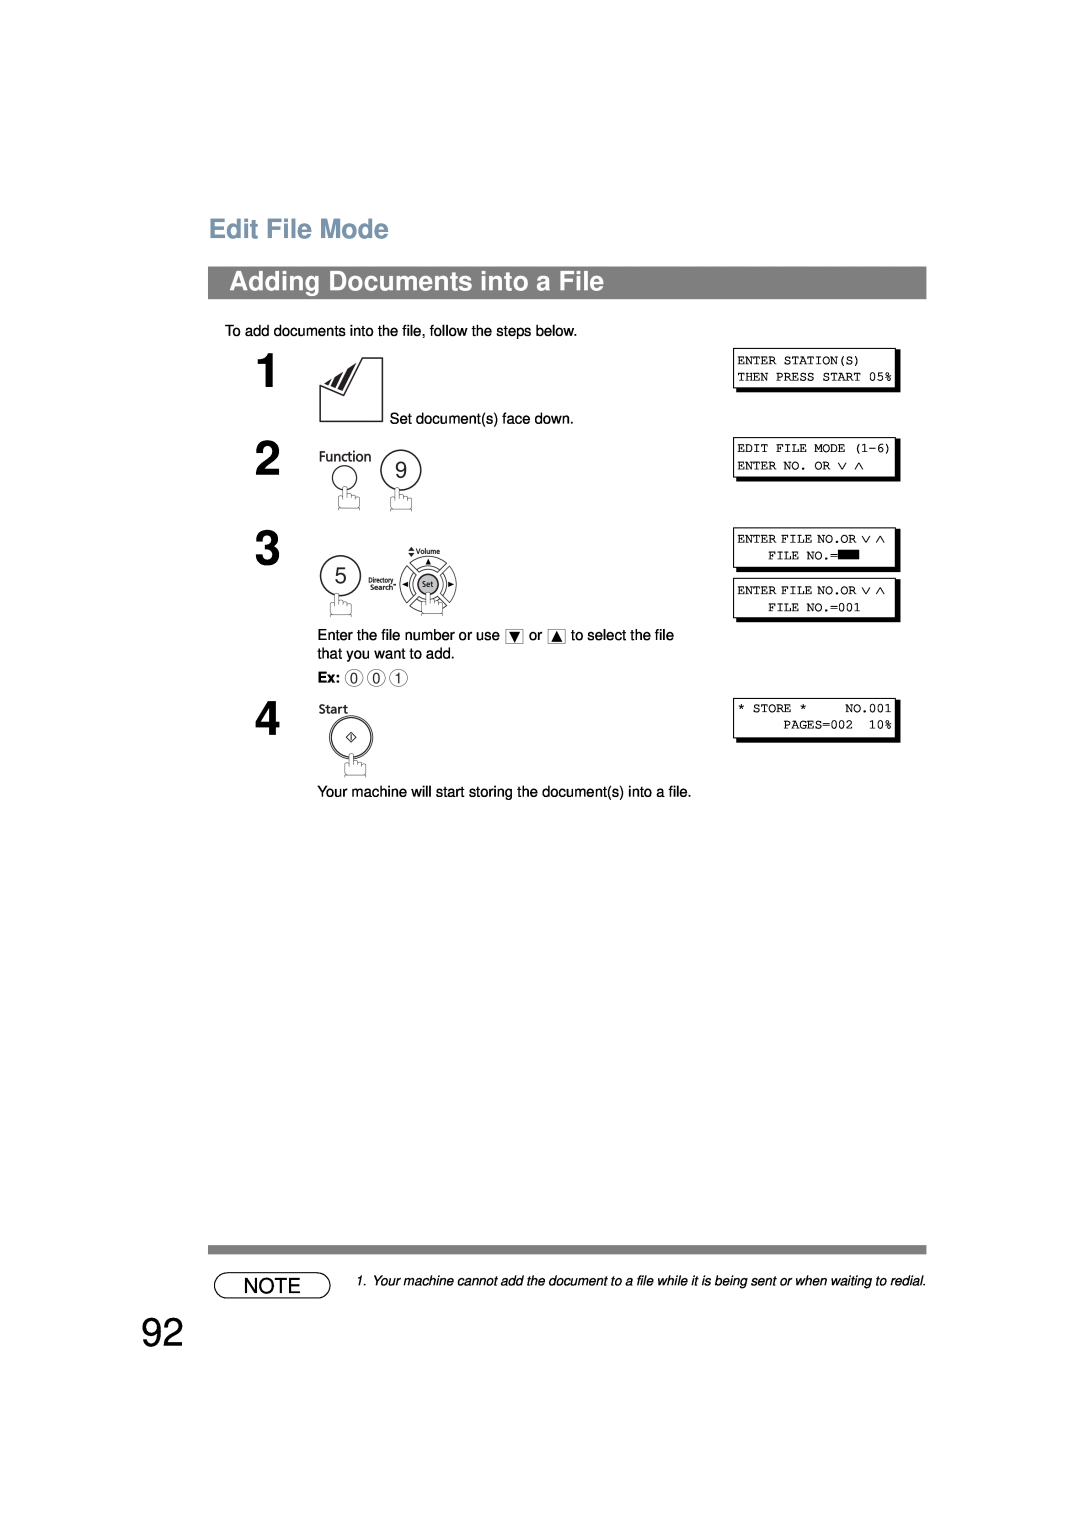 Panasonic UF-6200 operating instructions Adding Documents into a File, Edit File Mode 